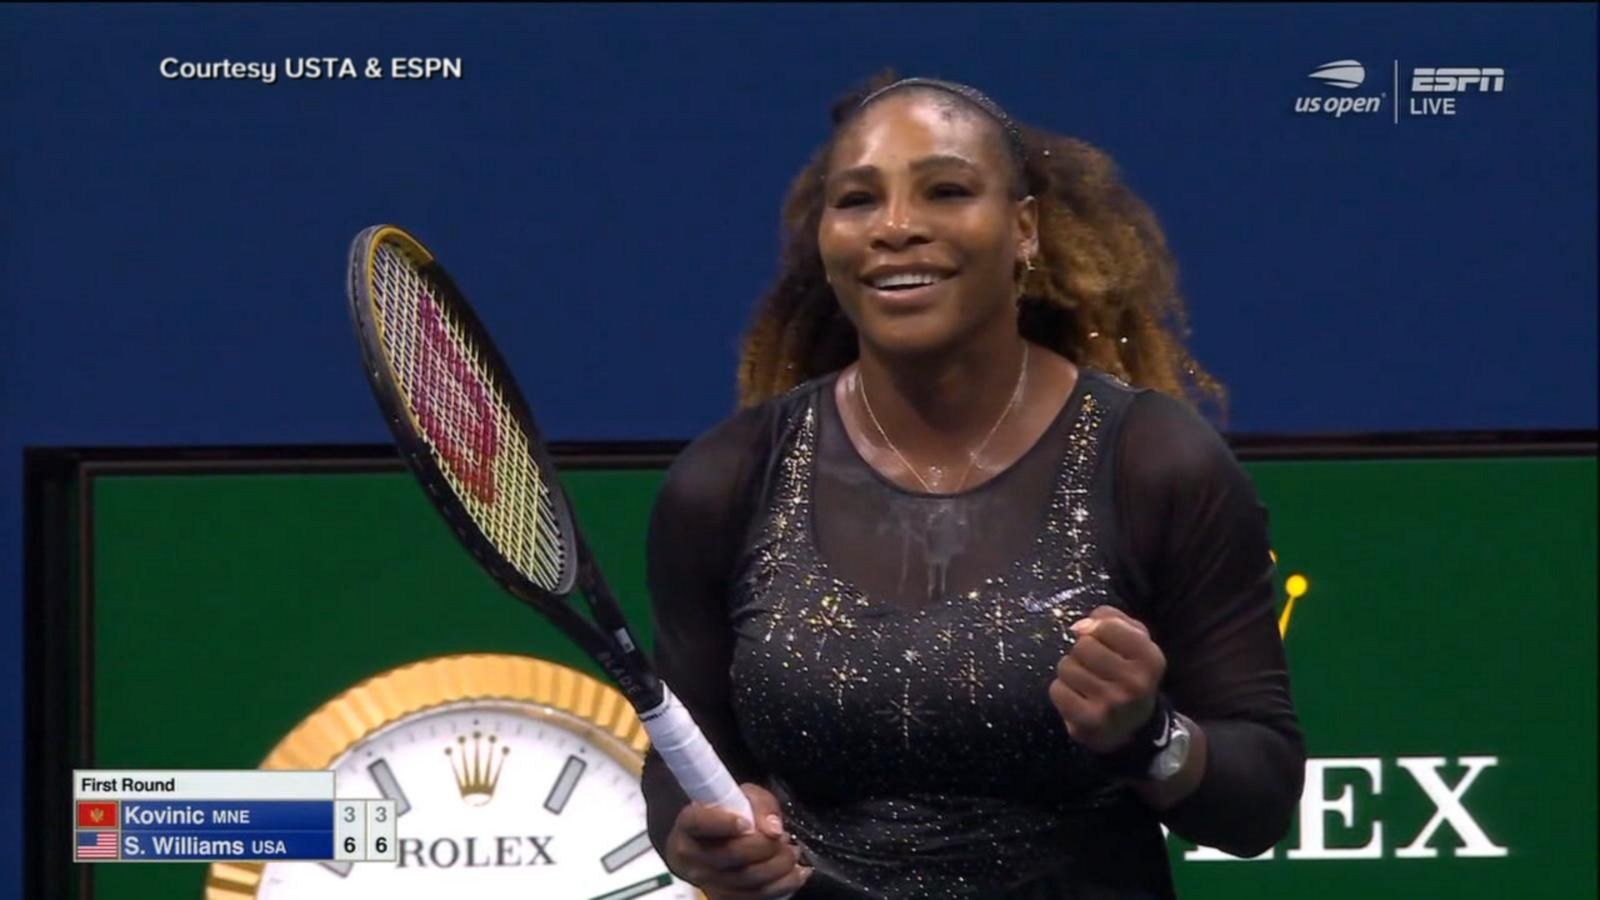 Serena Williams wins 1st round match of US Open